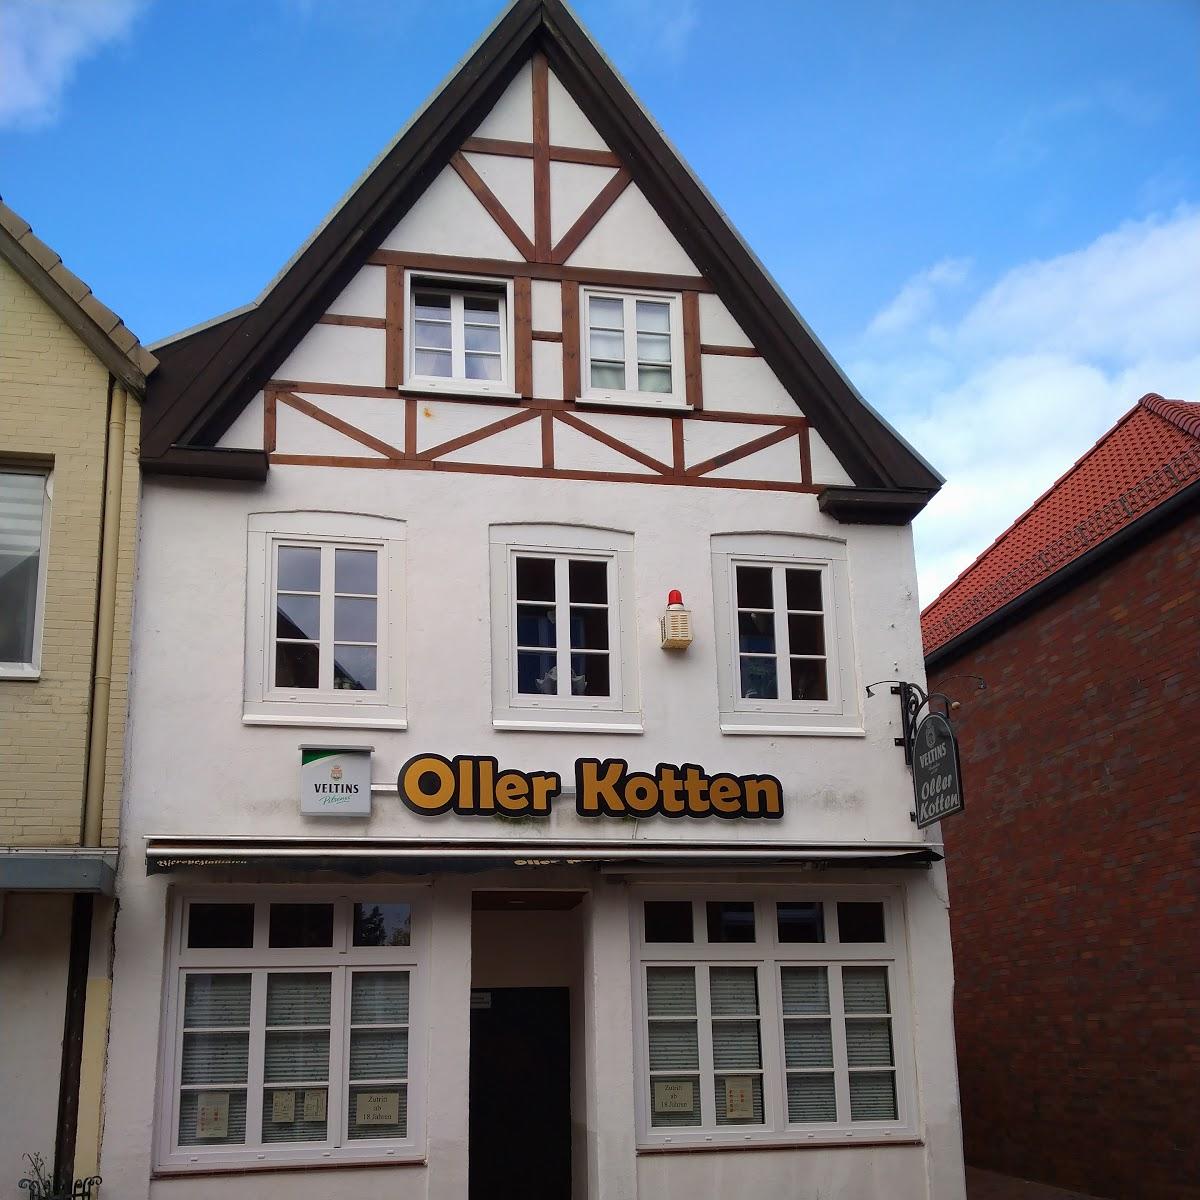 Restaurant "Oller Kotten" in  Glückstadt